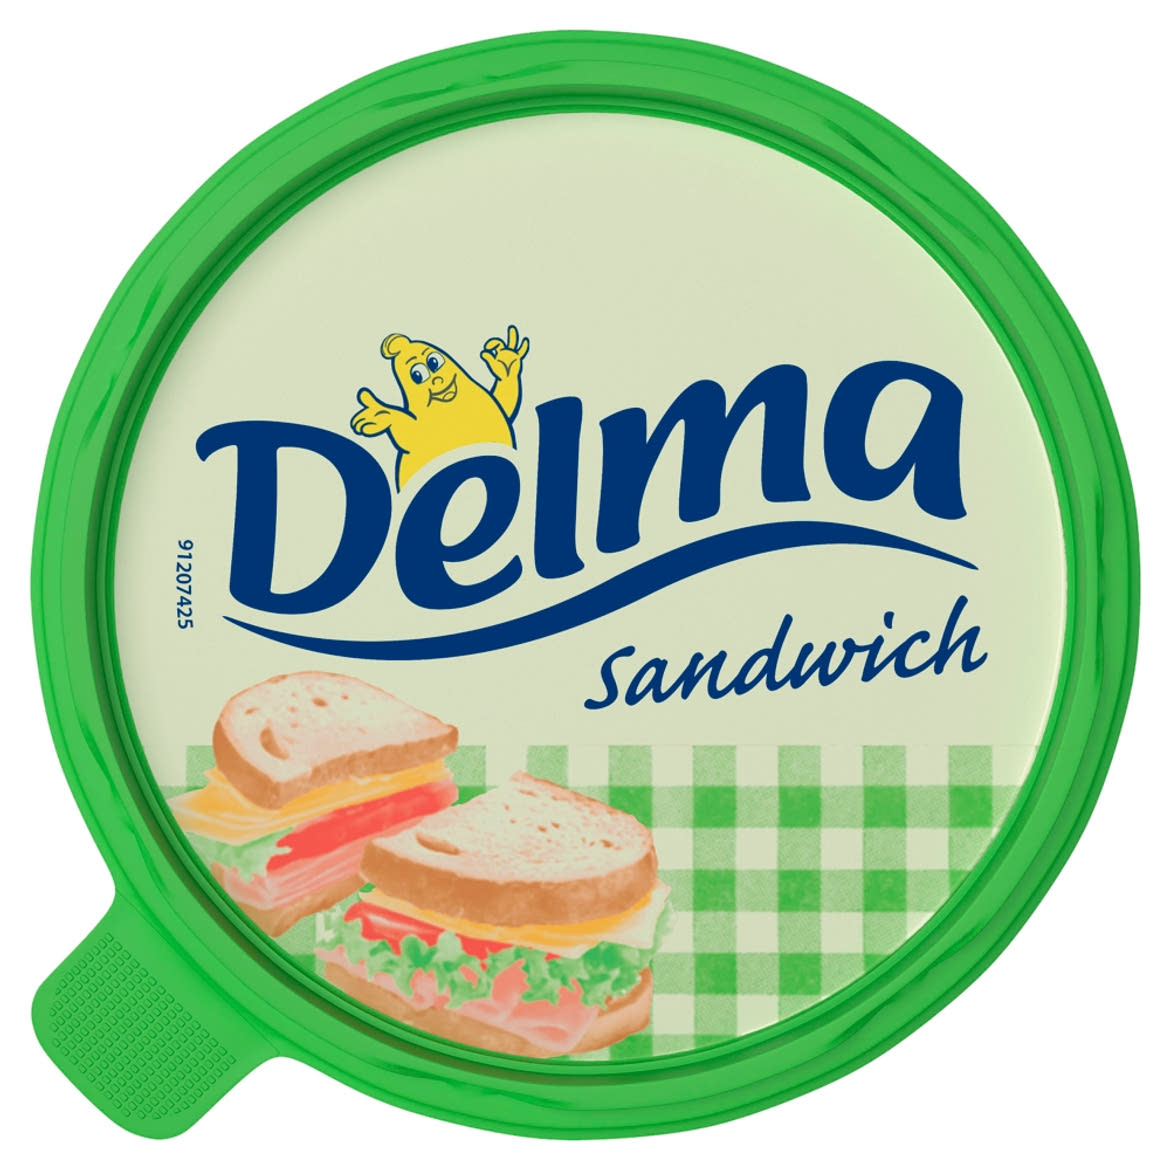 Delma Sandwich 20% zsírtartalmú margarin